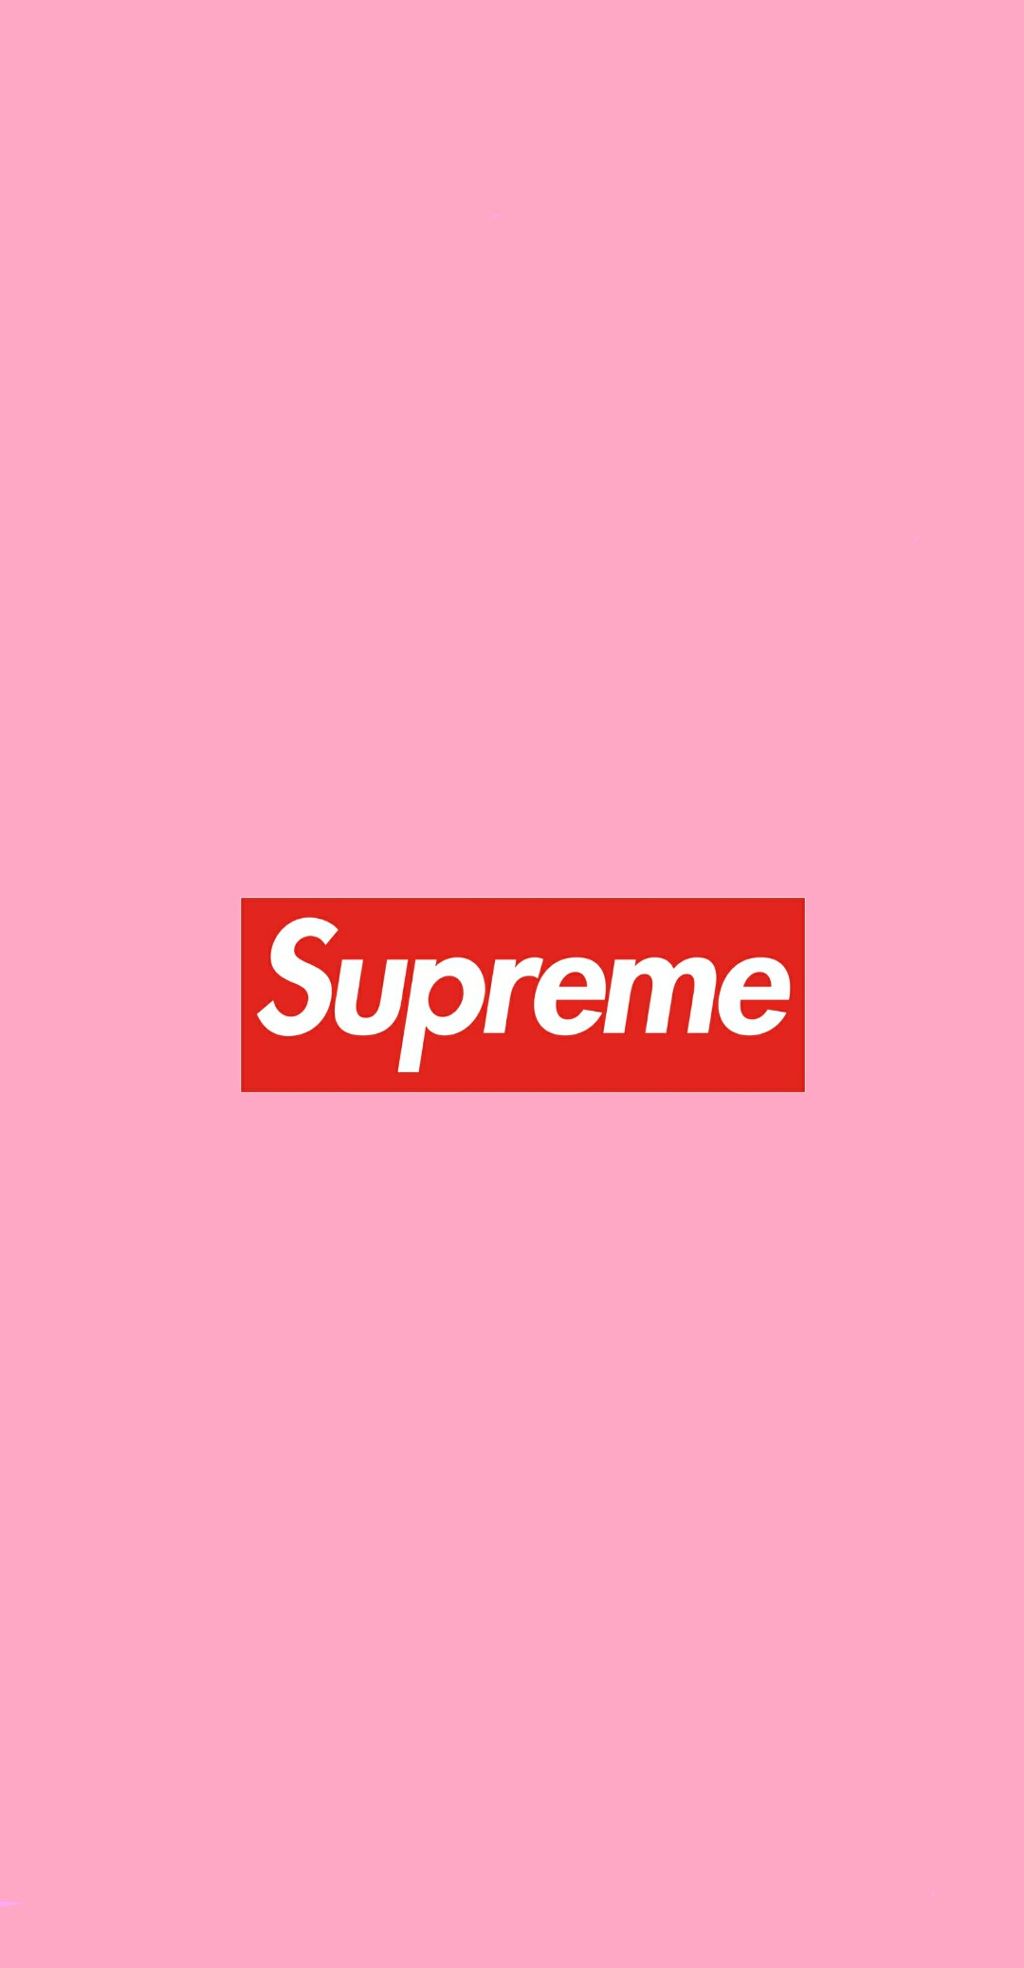 supreme wallpaper,text,pink,red,font,logo